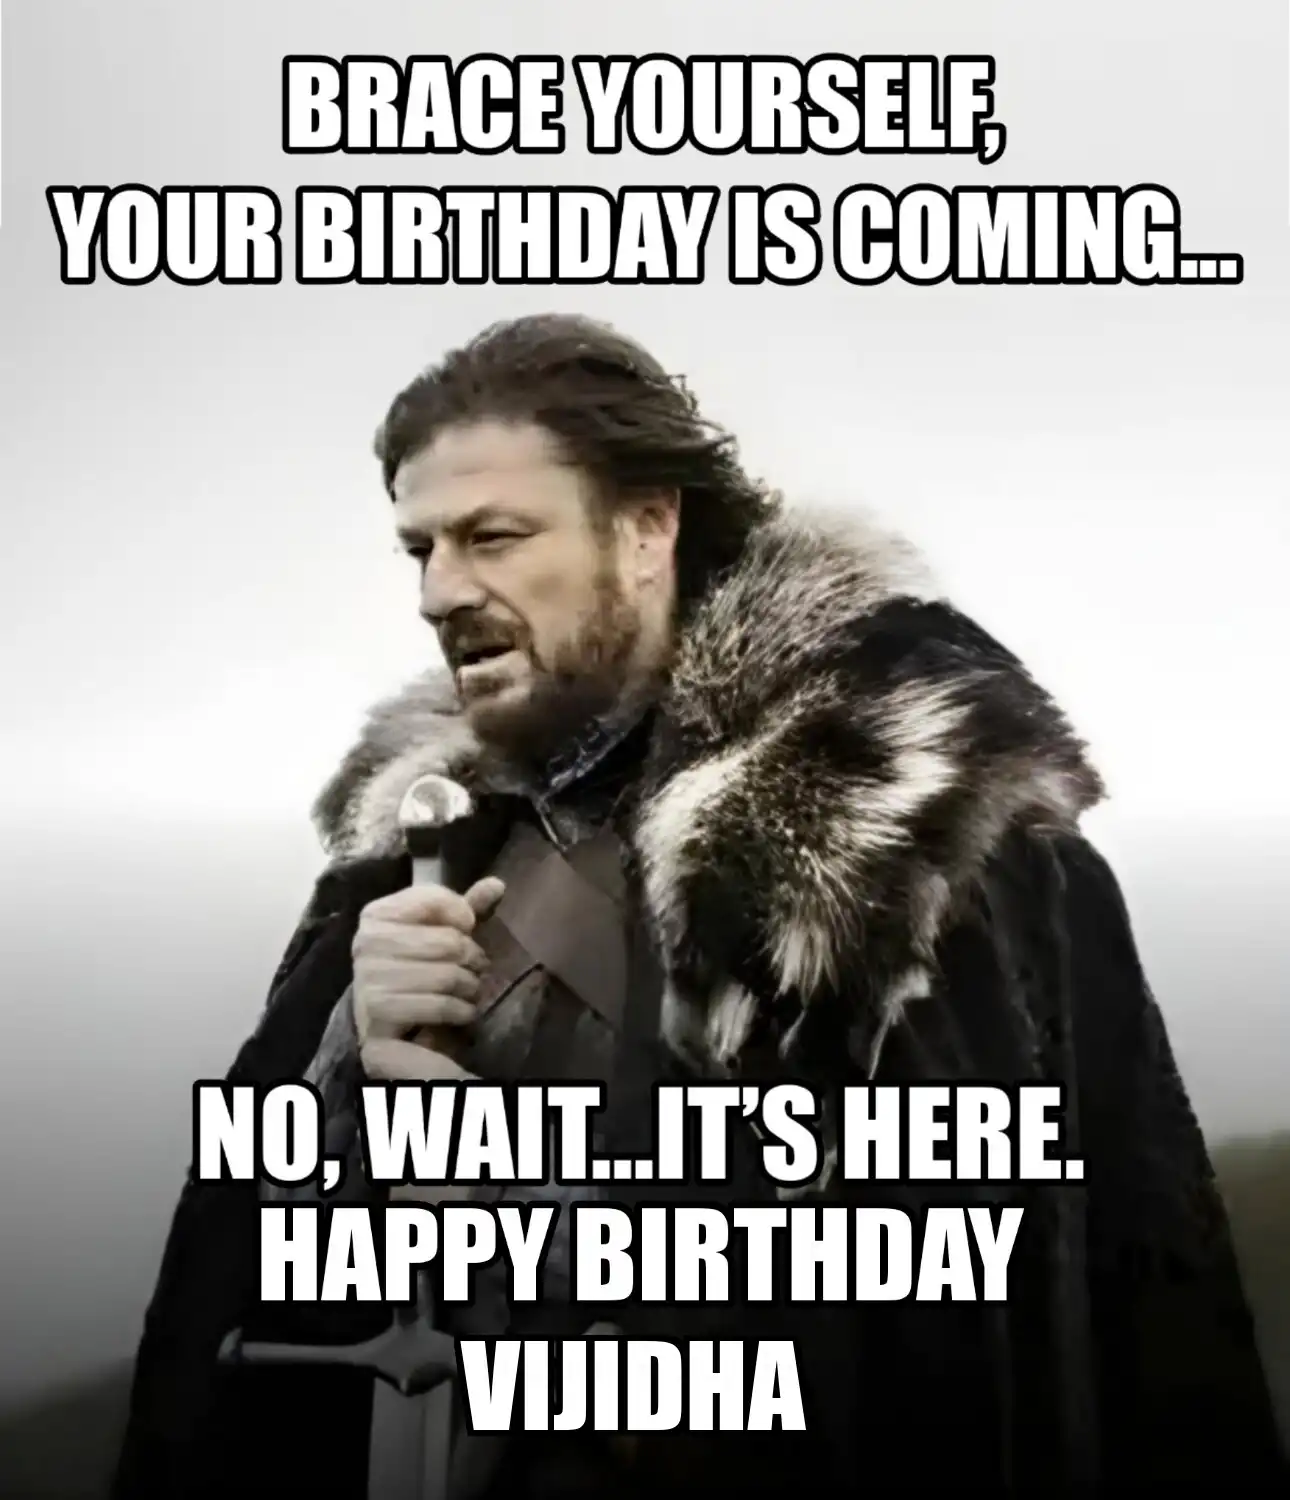 Happy Birthday Vijidha Brace Yourself Your Birthday Is Coming Meme